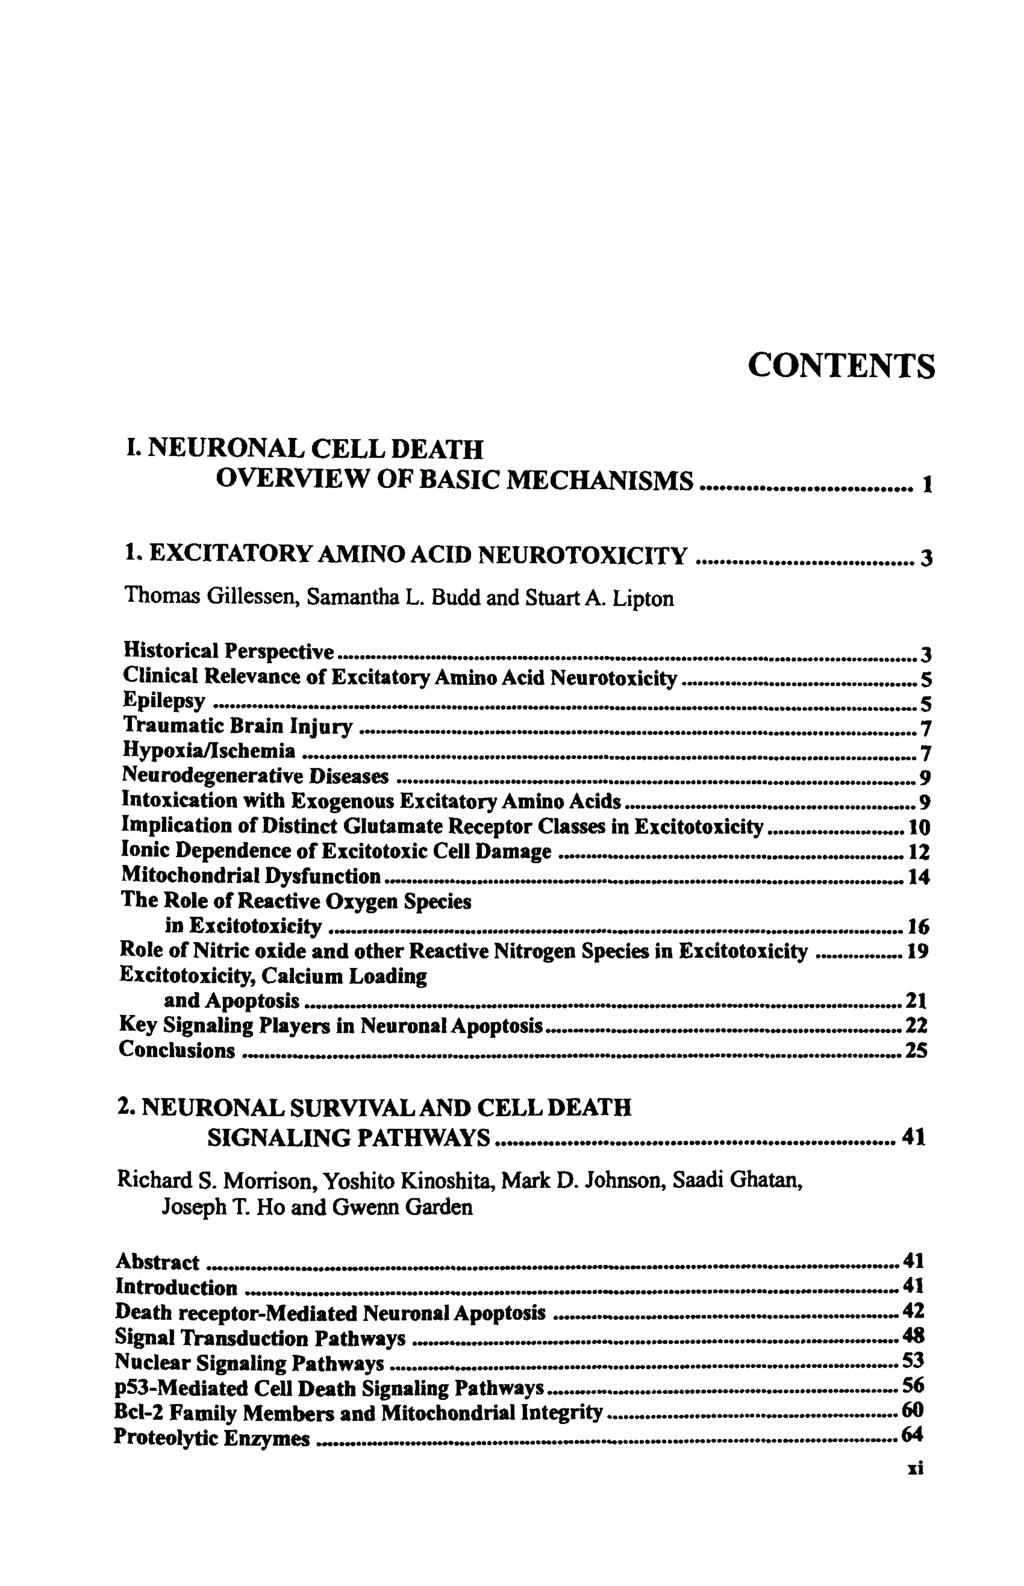 I. NEURONAL CELL DEATH OVERVIEW OF BASIC MECHANISMS 1 1. EXCITATORY AMINO ACID NEUROTOXICITY 3 Thomas Gillessen, Samantha L. Budd and Stuart A. Lipton Historical Perspective»».